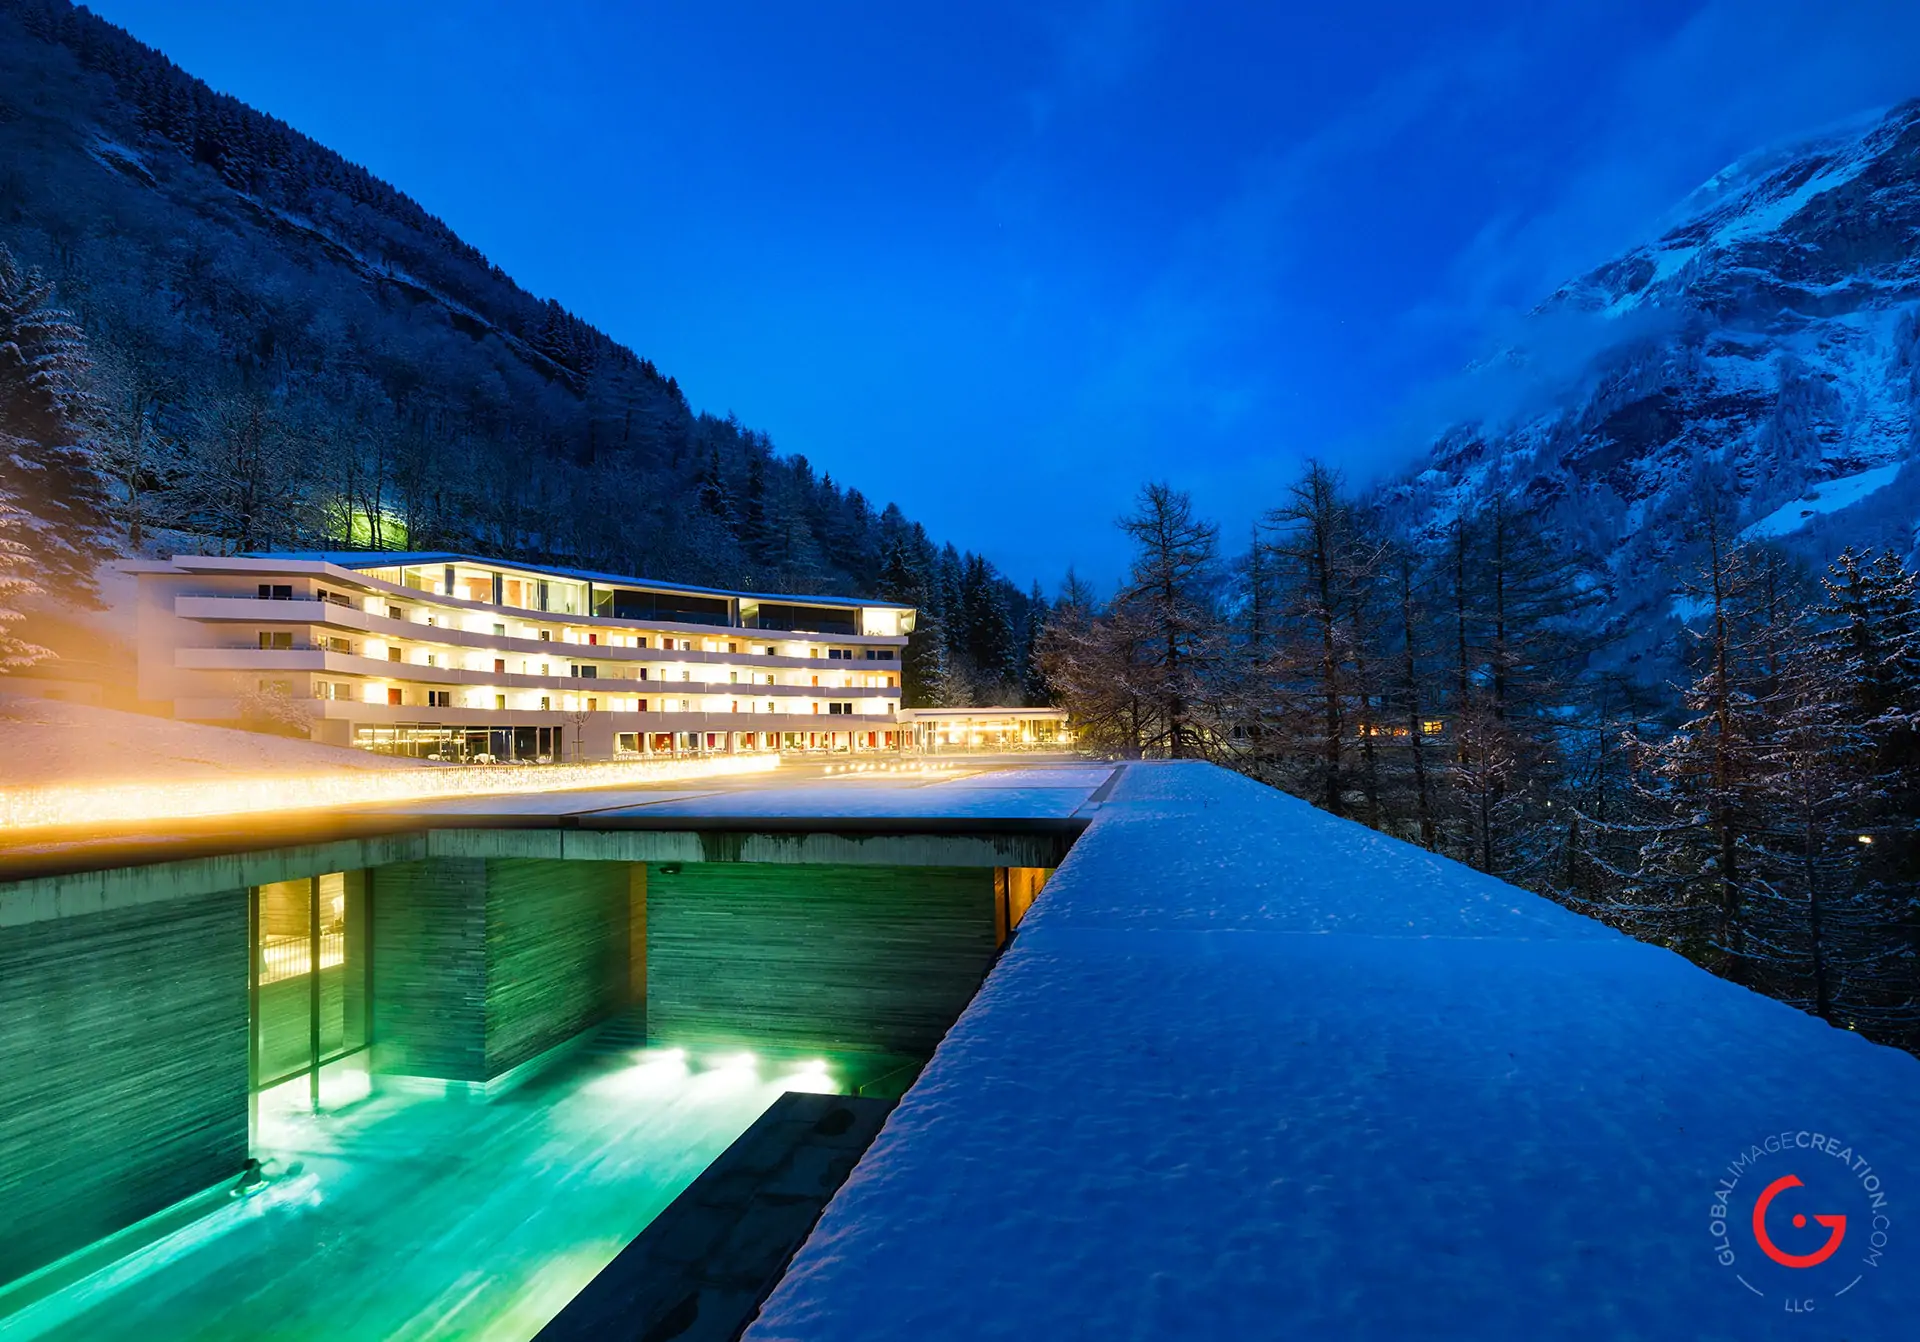 Hotel Photographers, Luxury Hotel Photography, Resort Photographer of The Therme at 7132 Hotel, Vals - Switzerland